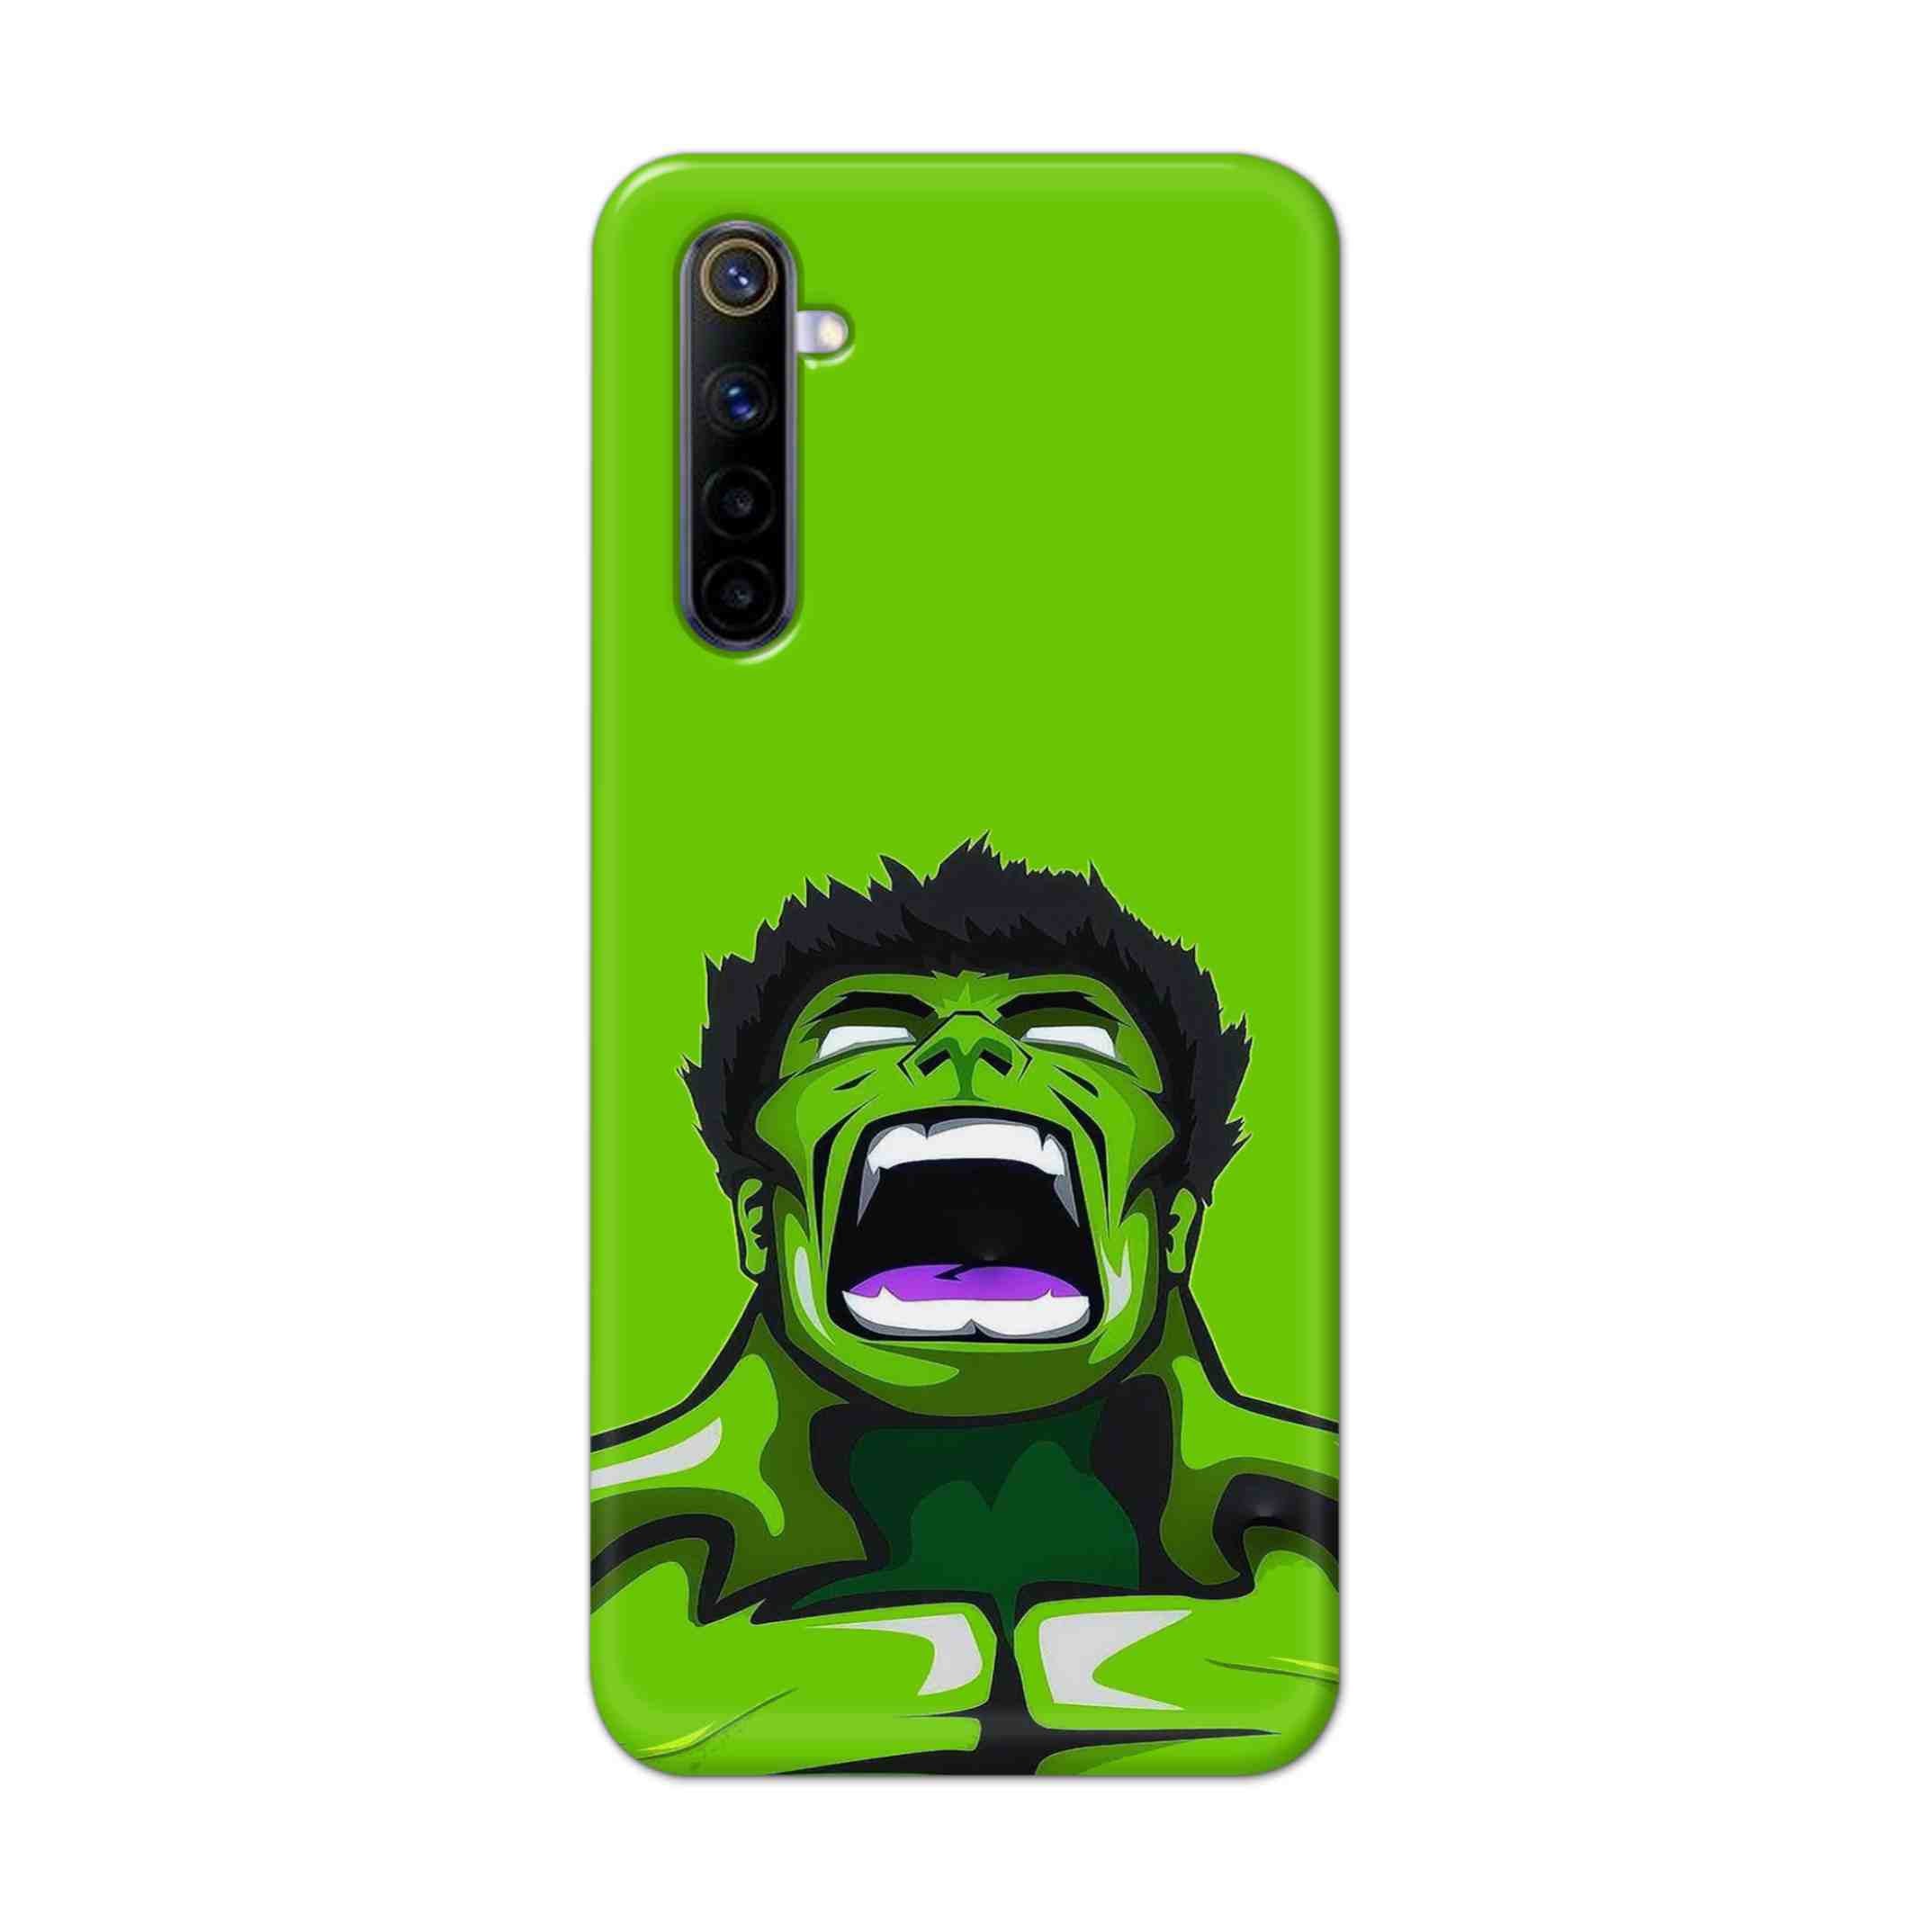 Buy Green Hulk Hard Back Mobile Phone Case Cover For REALME 6 PRO Online